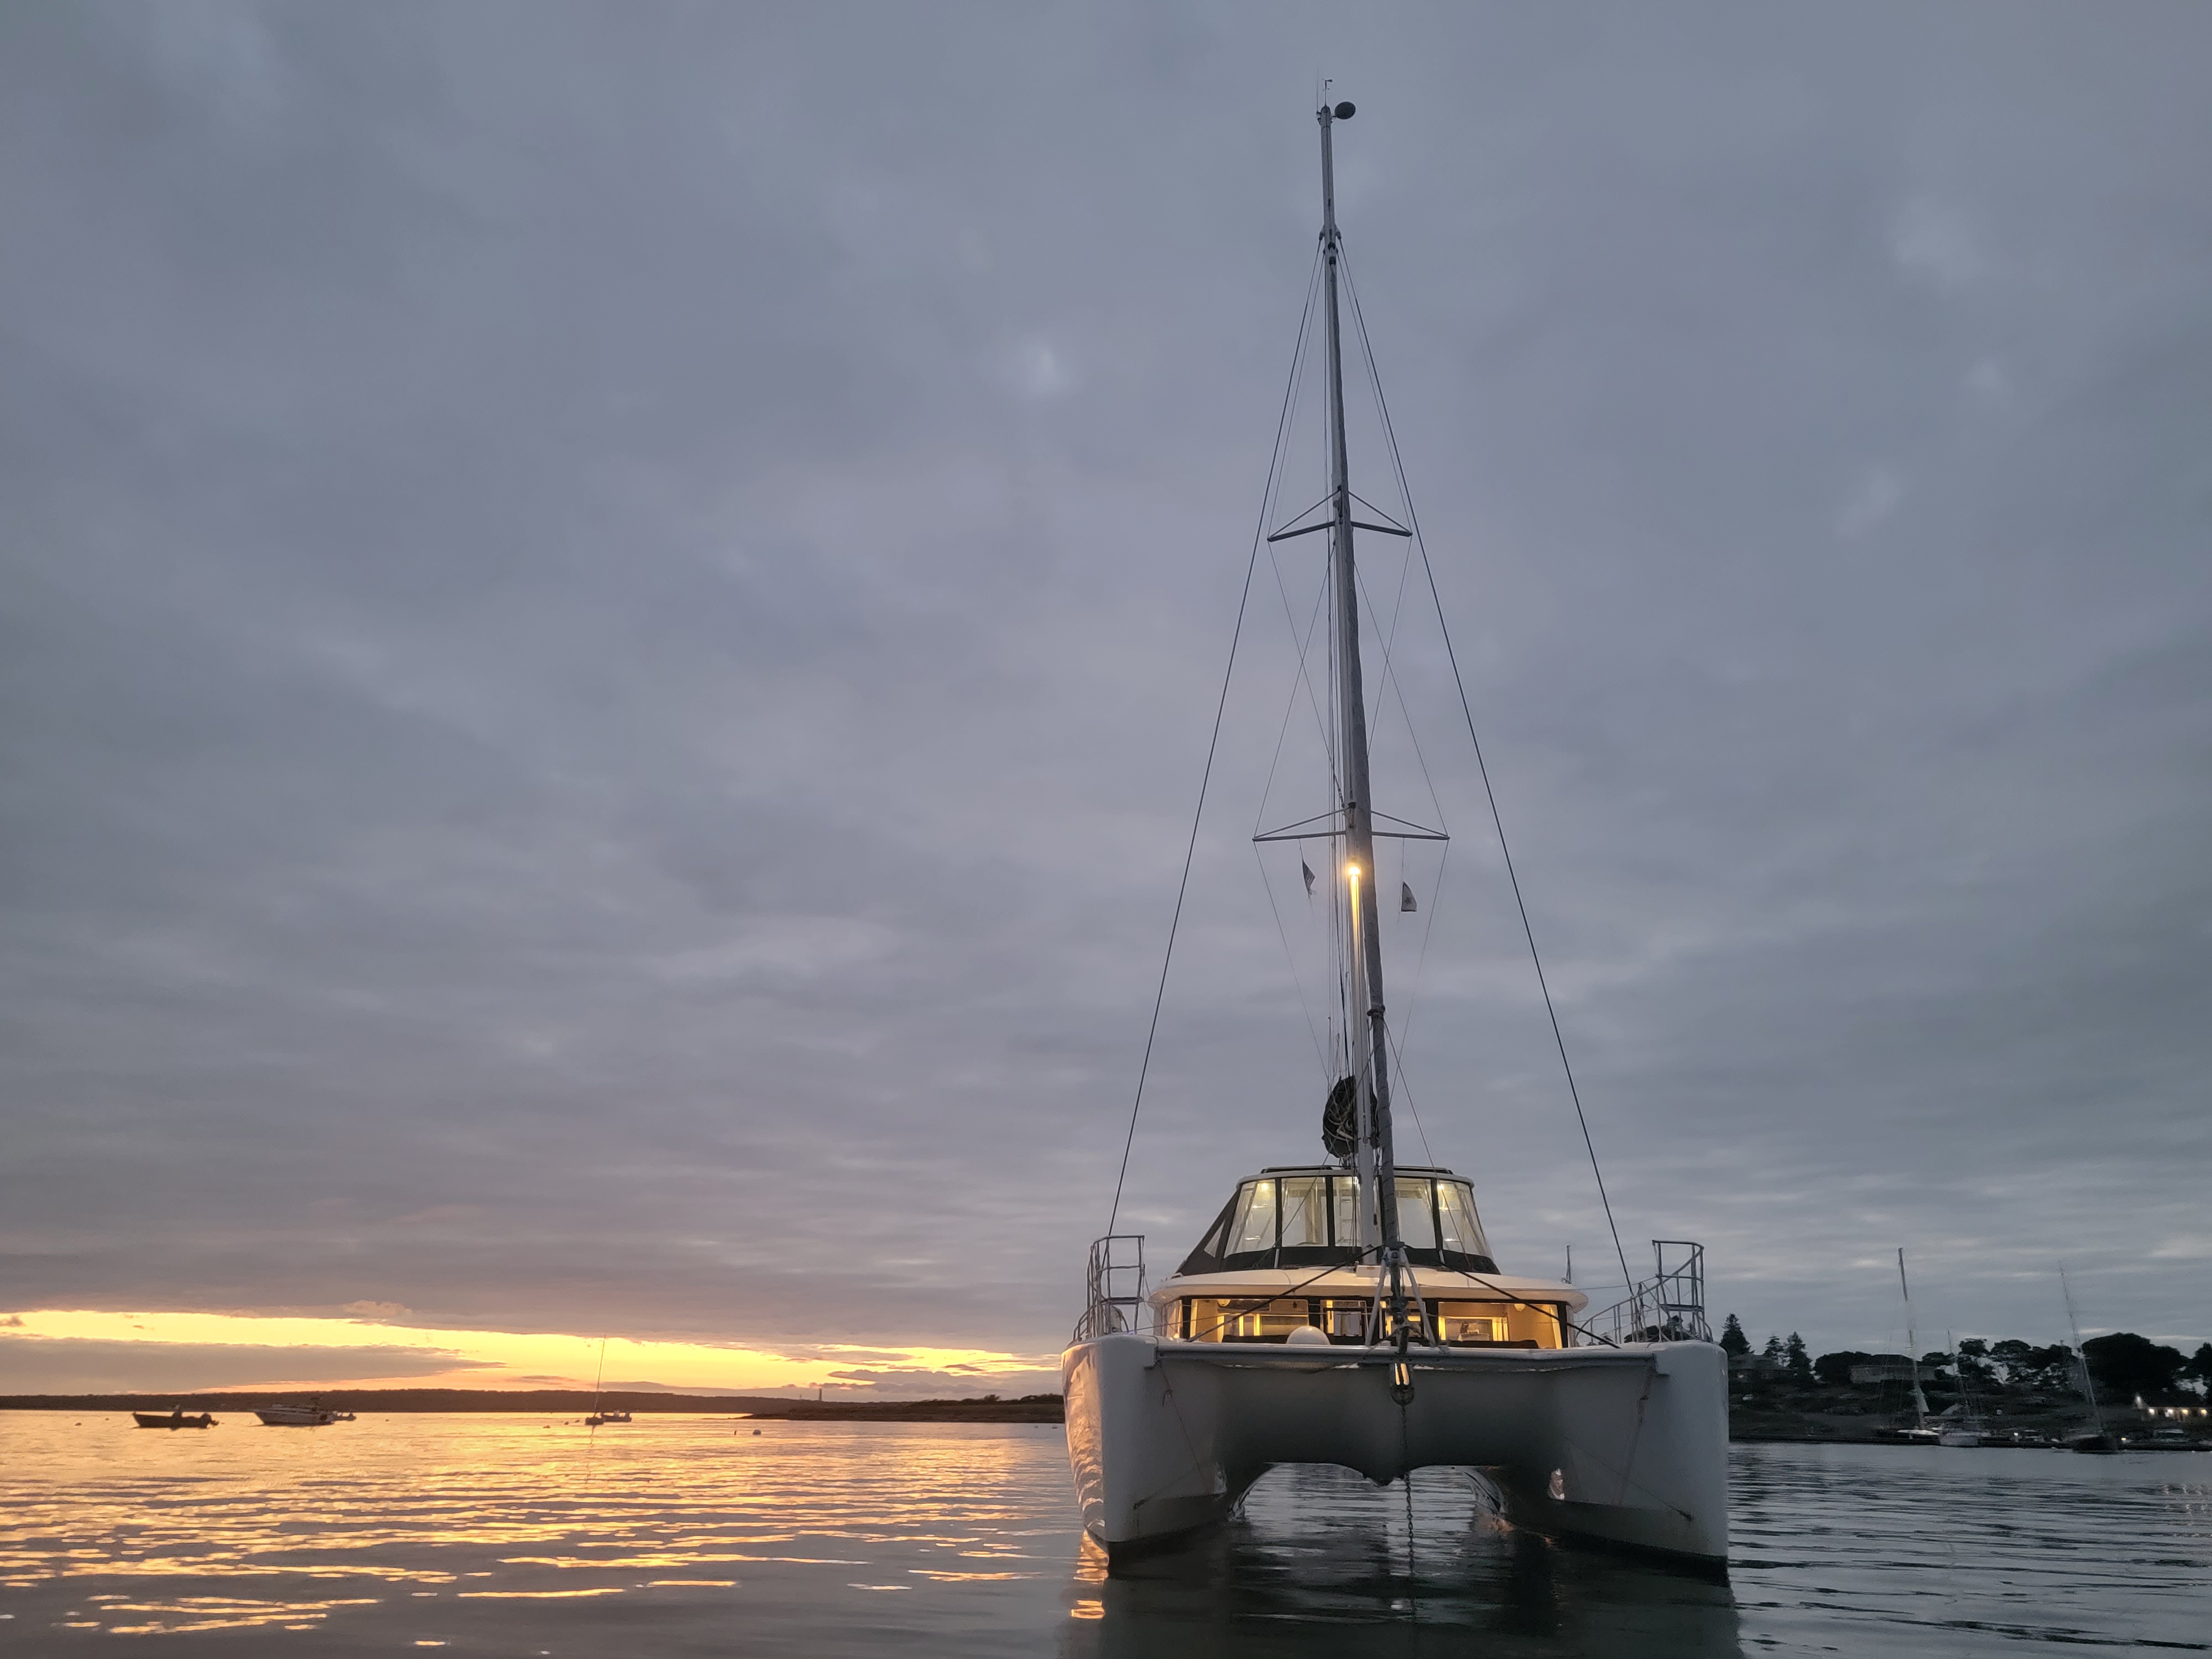 2018 Lagoon 450F Owner's version Sailboat for sale in Dania Beach, FL - image 1 